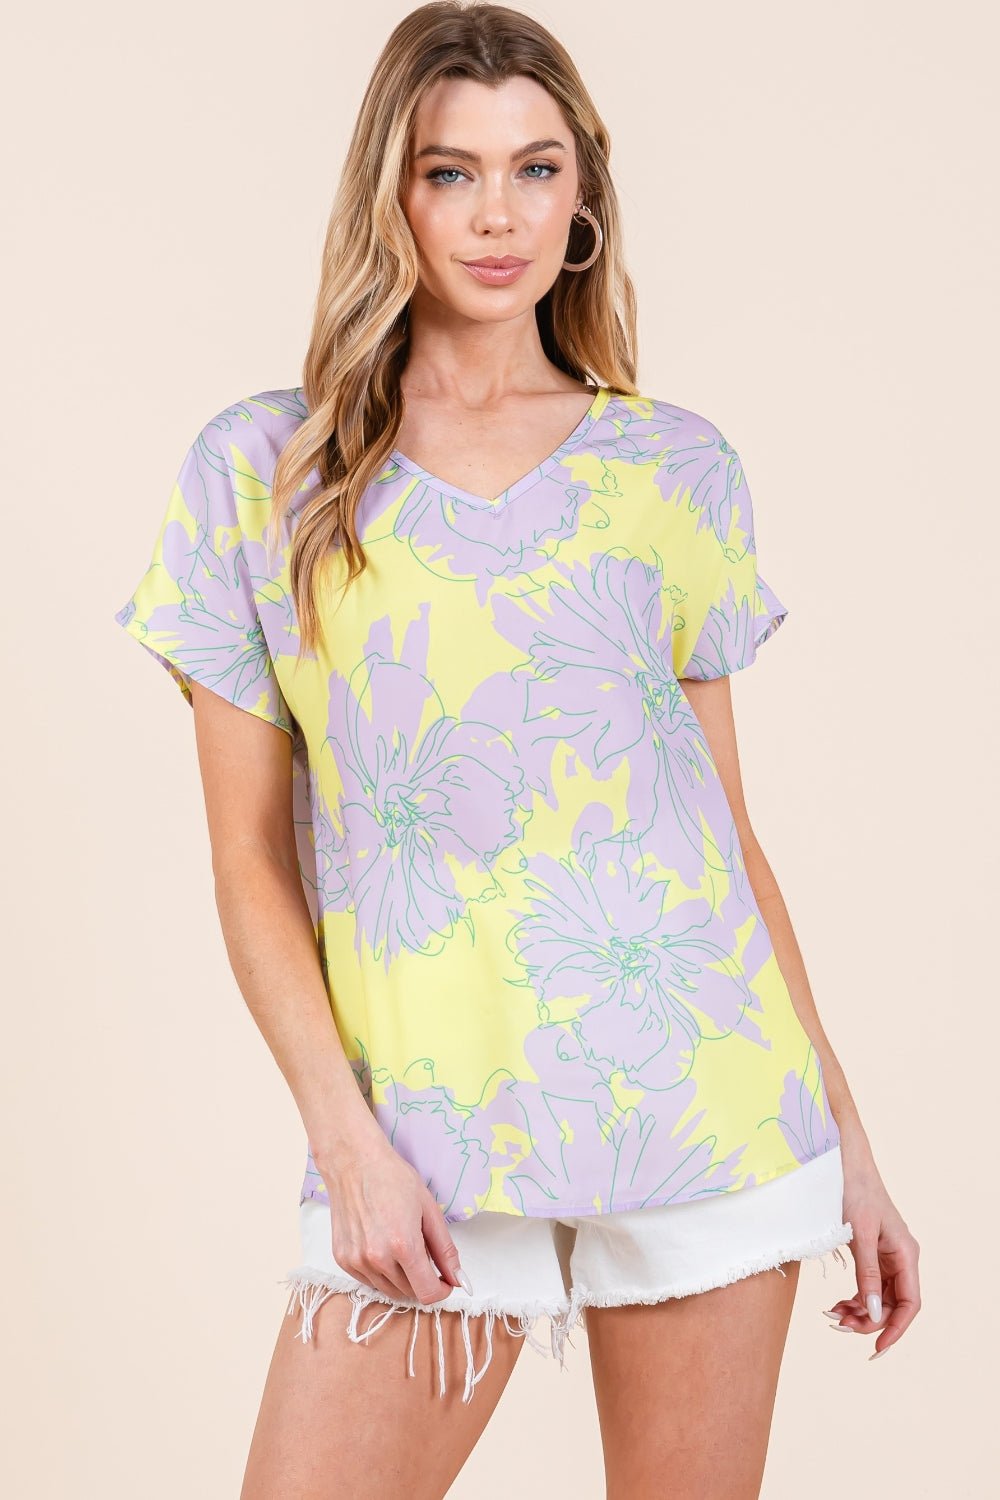 Floral Short Sleeve T-Shirt in Lilac YellowT-ShirtBOMBOM